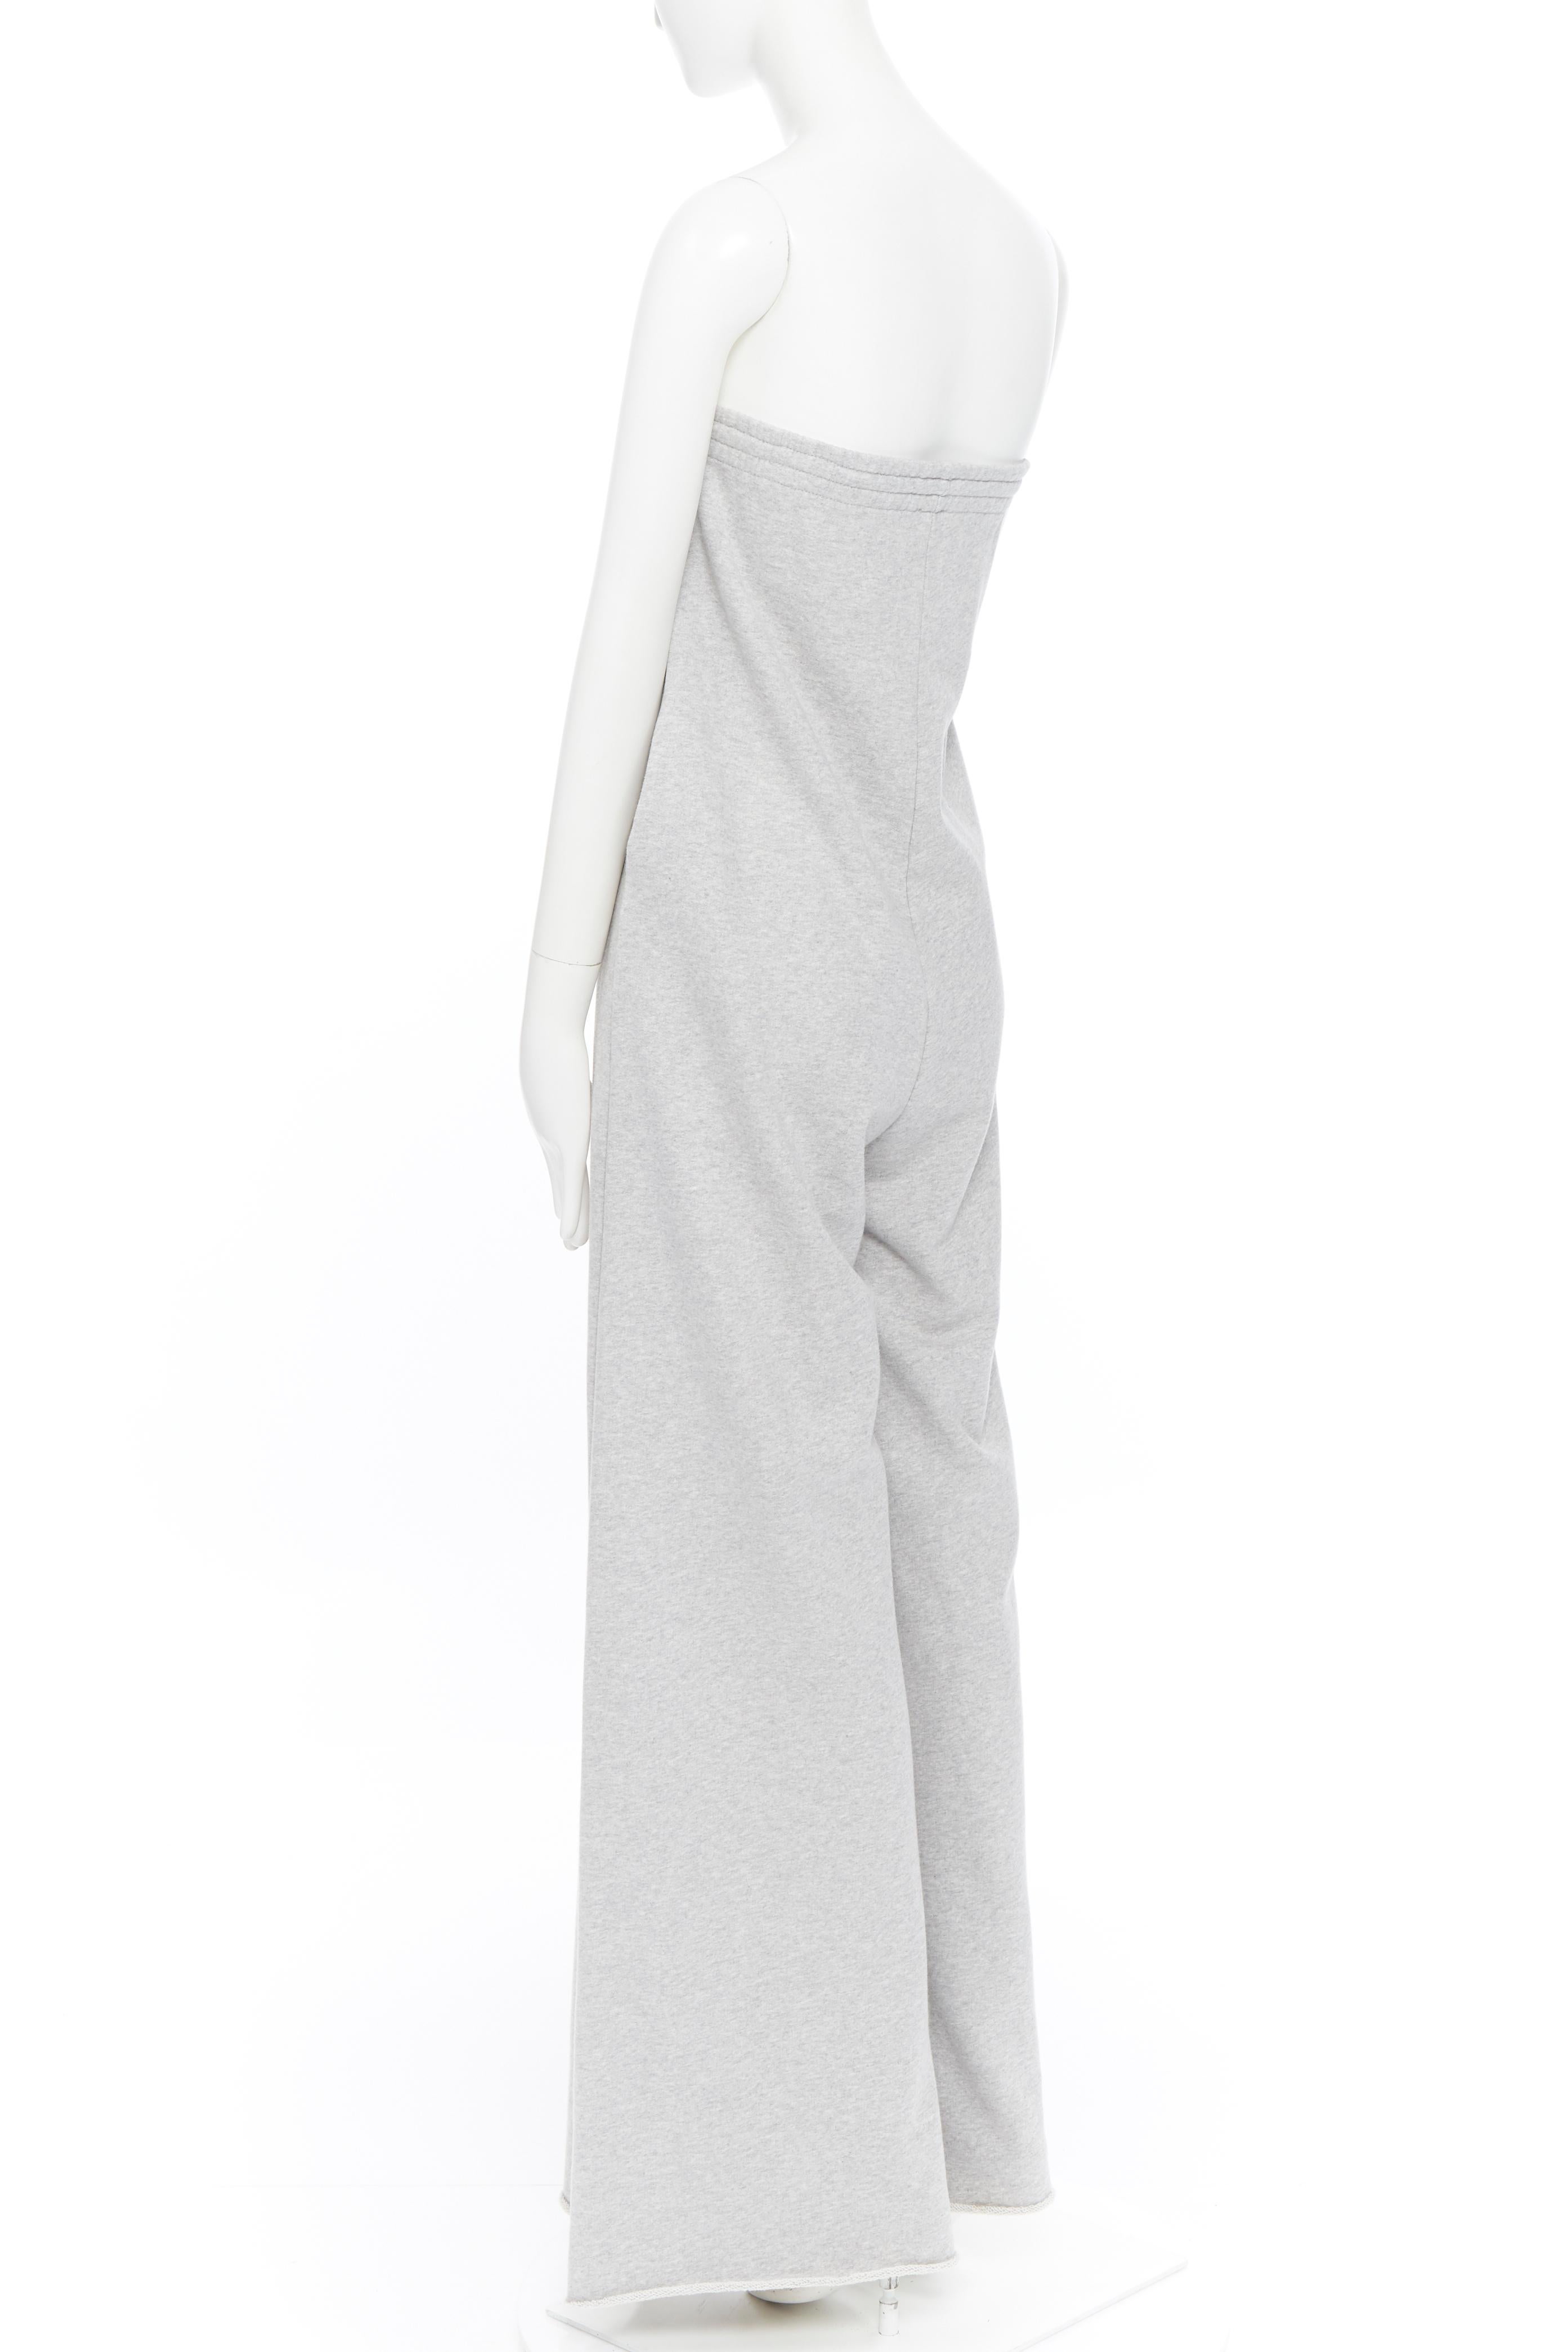 new VETEMENTS AW18 grey cotton oversized extreme wide leg sweatpants jumpsuit S 1